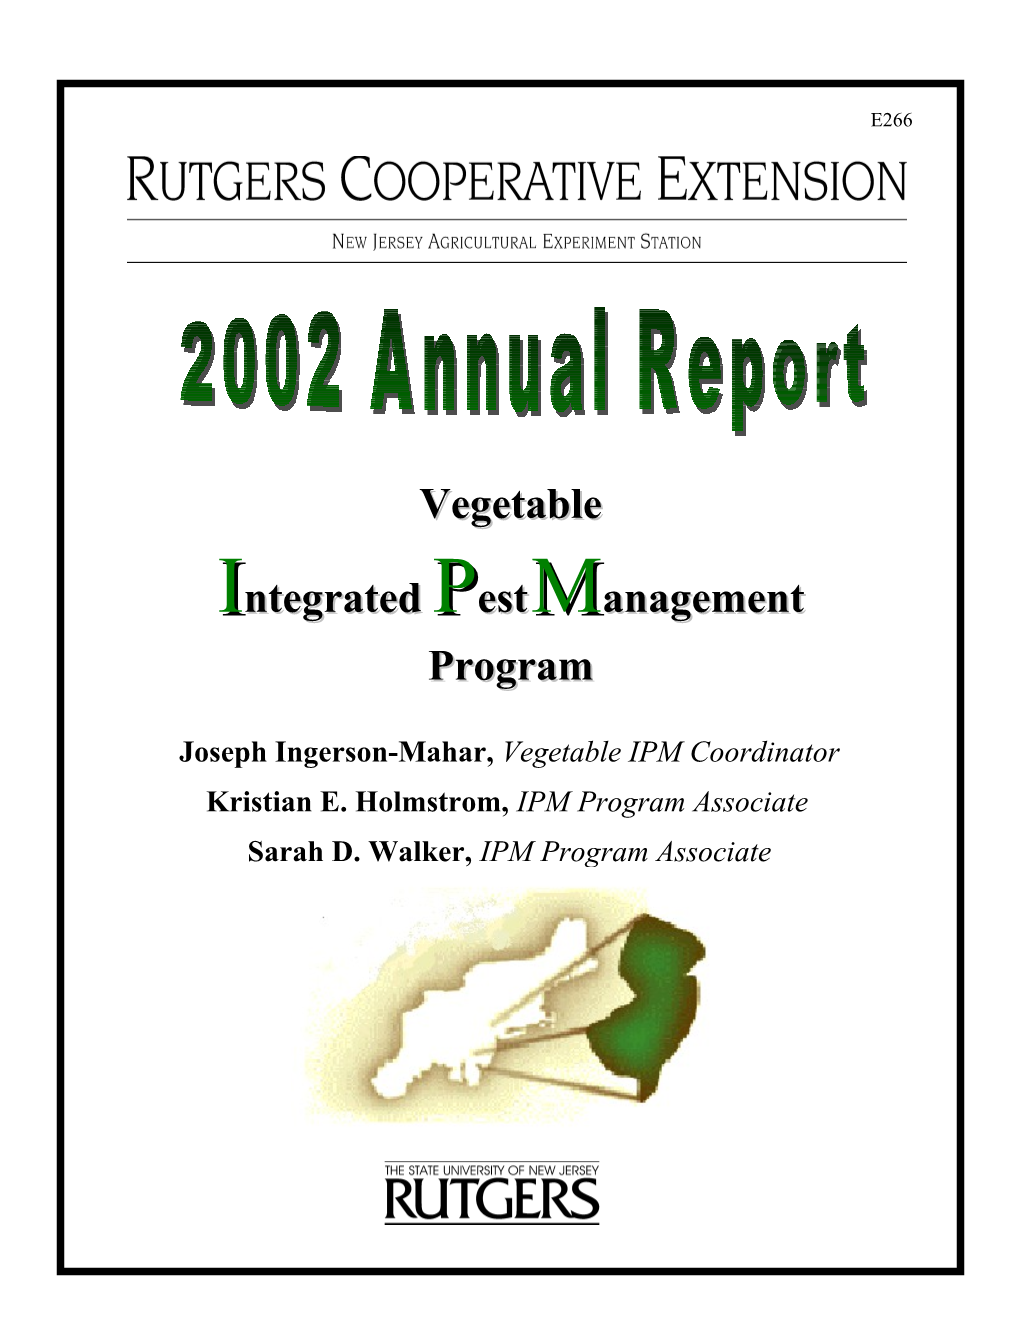 Joseph Ingerson-Mahar, Vegetable IPM Coordinator